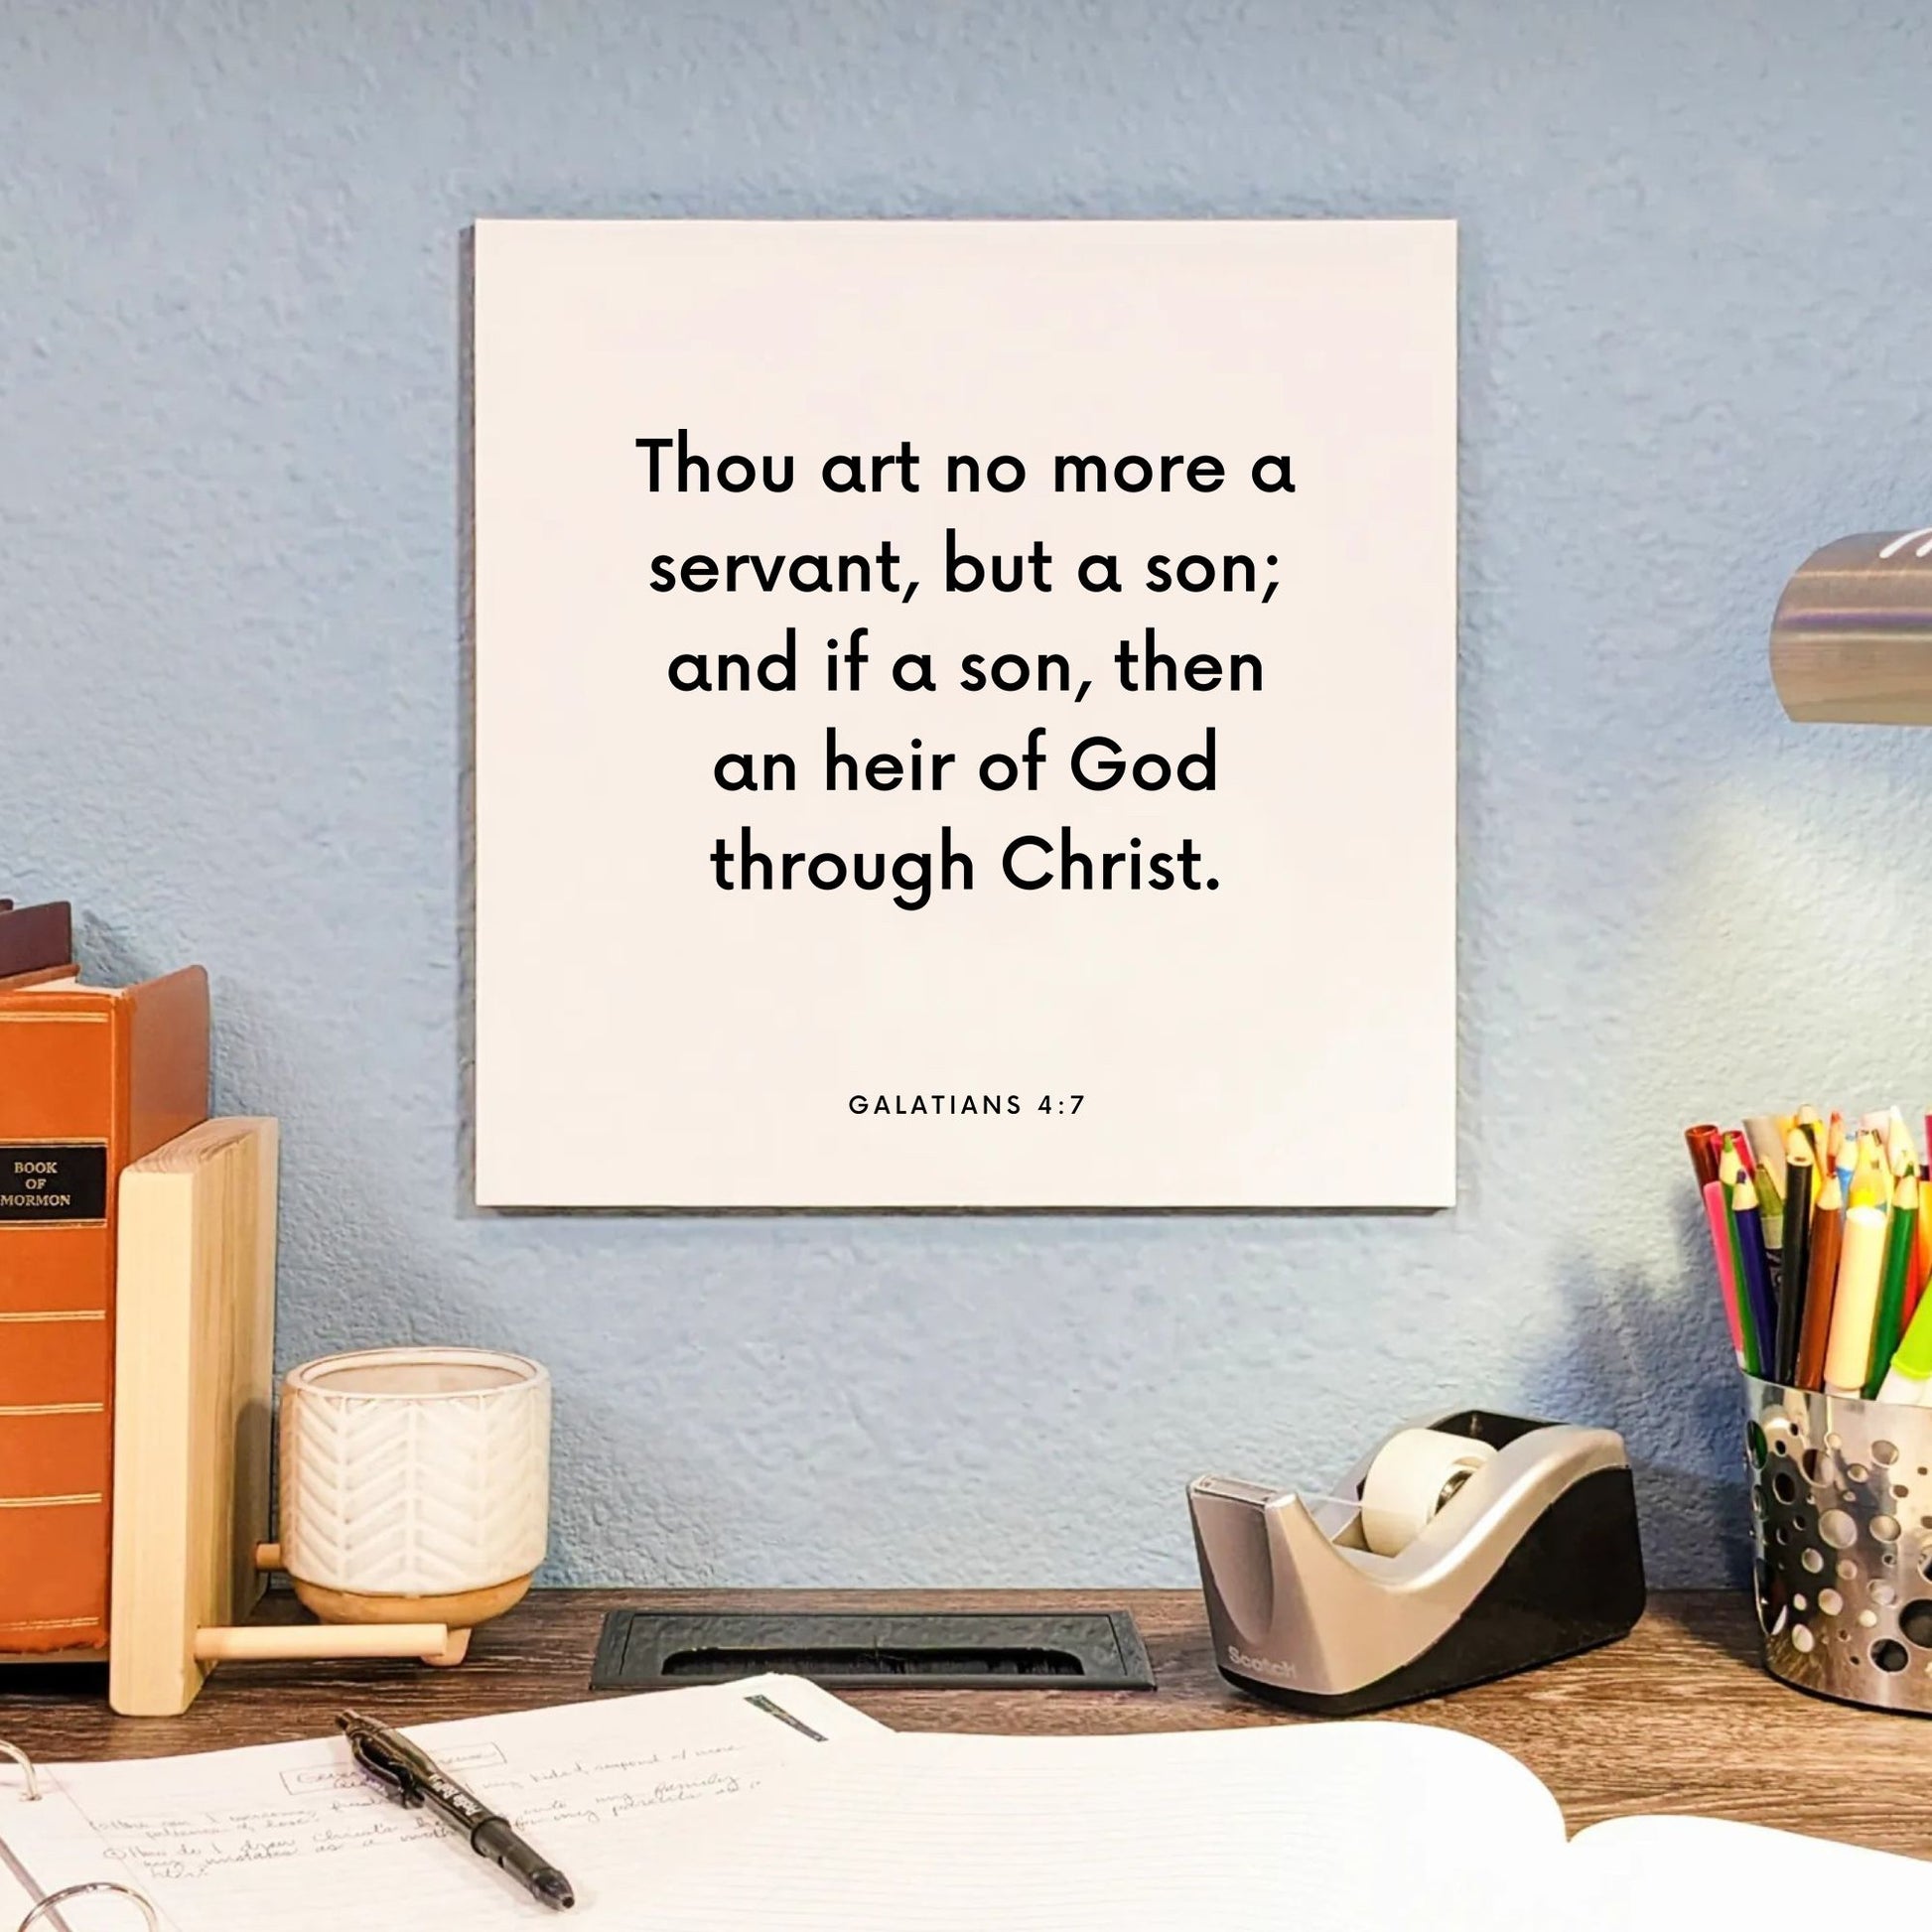 Desk mouting of the scripture tile for Galatians 4:7 - "Thou art no more a servant, but a son"